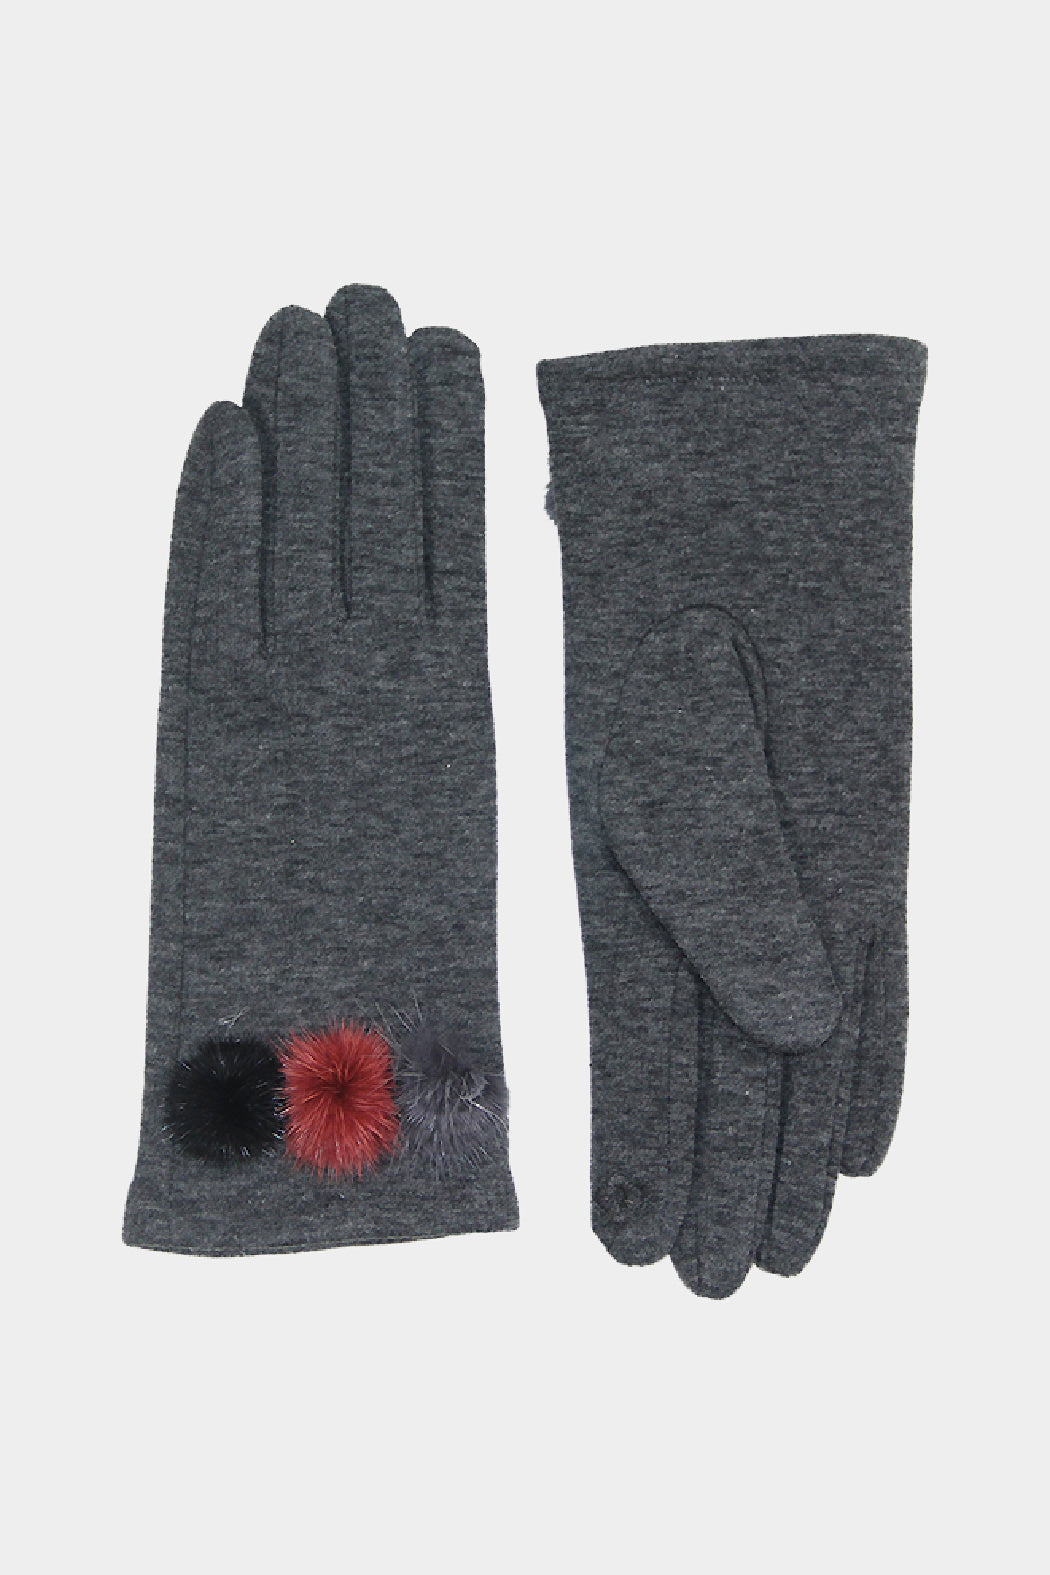 3 Pom Gloves - Embellish Your Life 